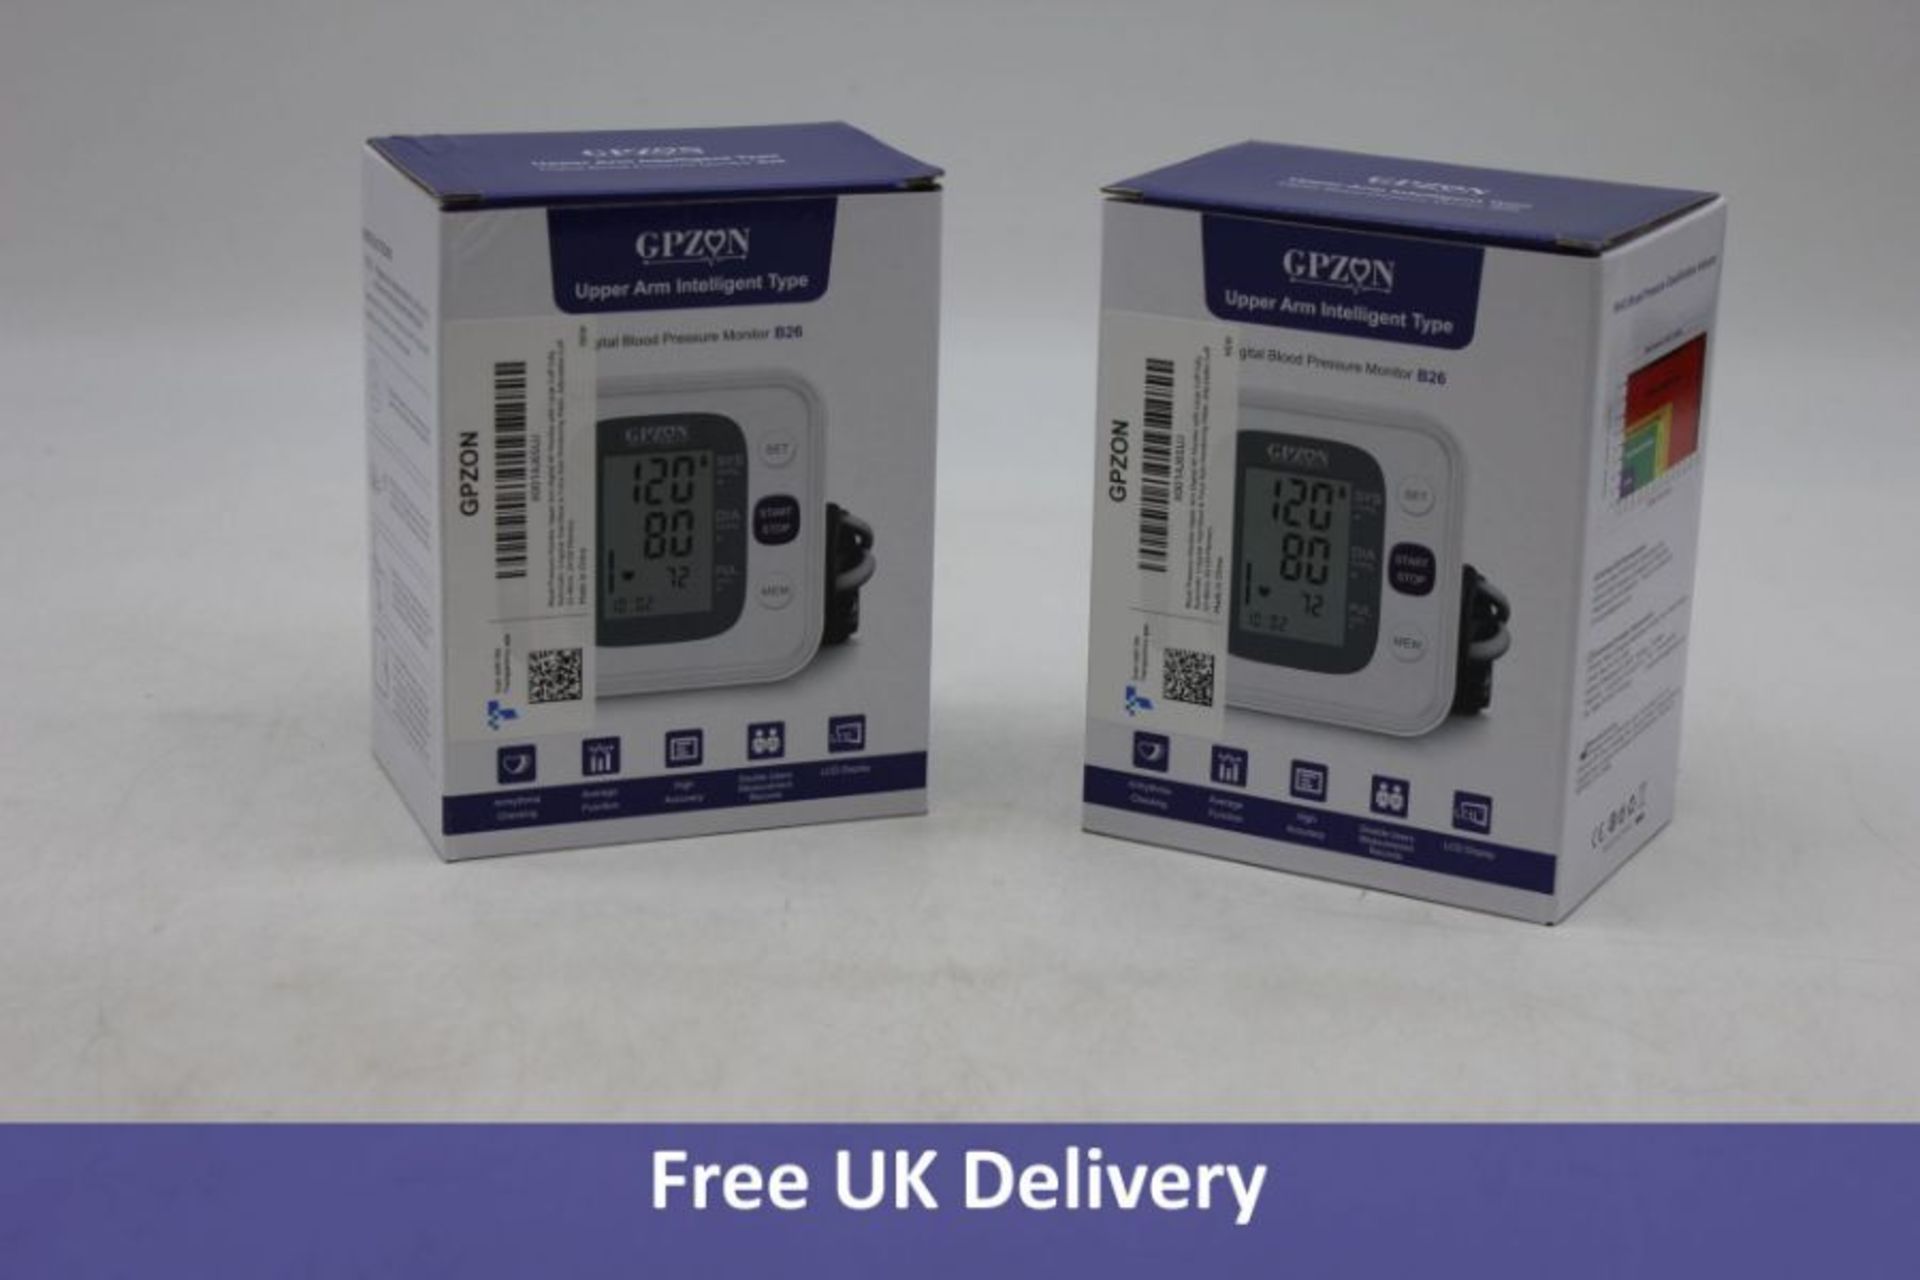 Thirty Gpzon Upper Arm Intelligent Type Digital B26 Blood Pressure Monitors